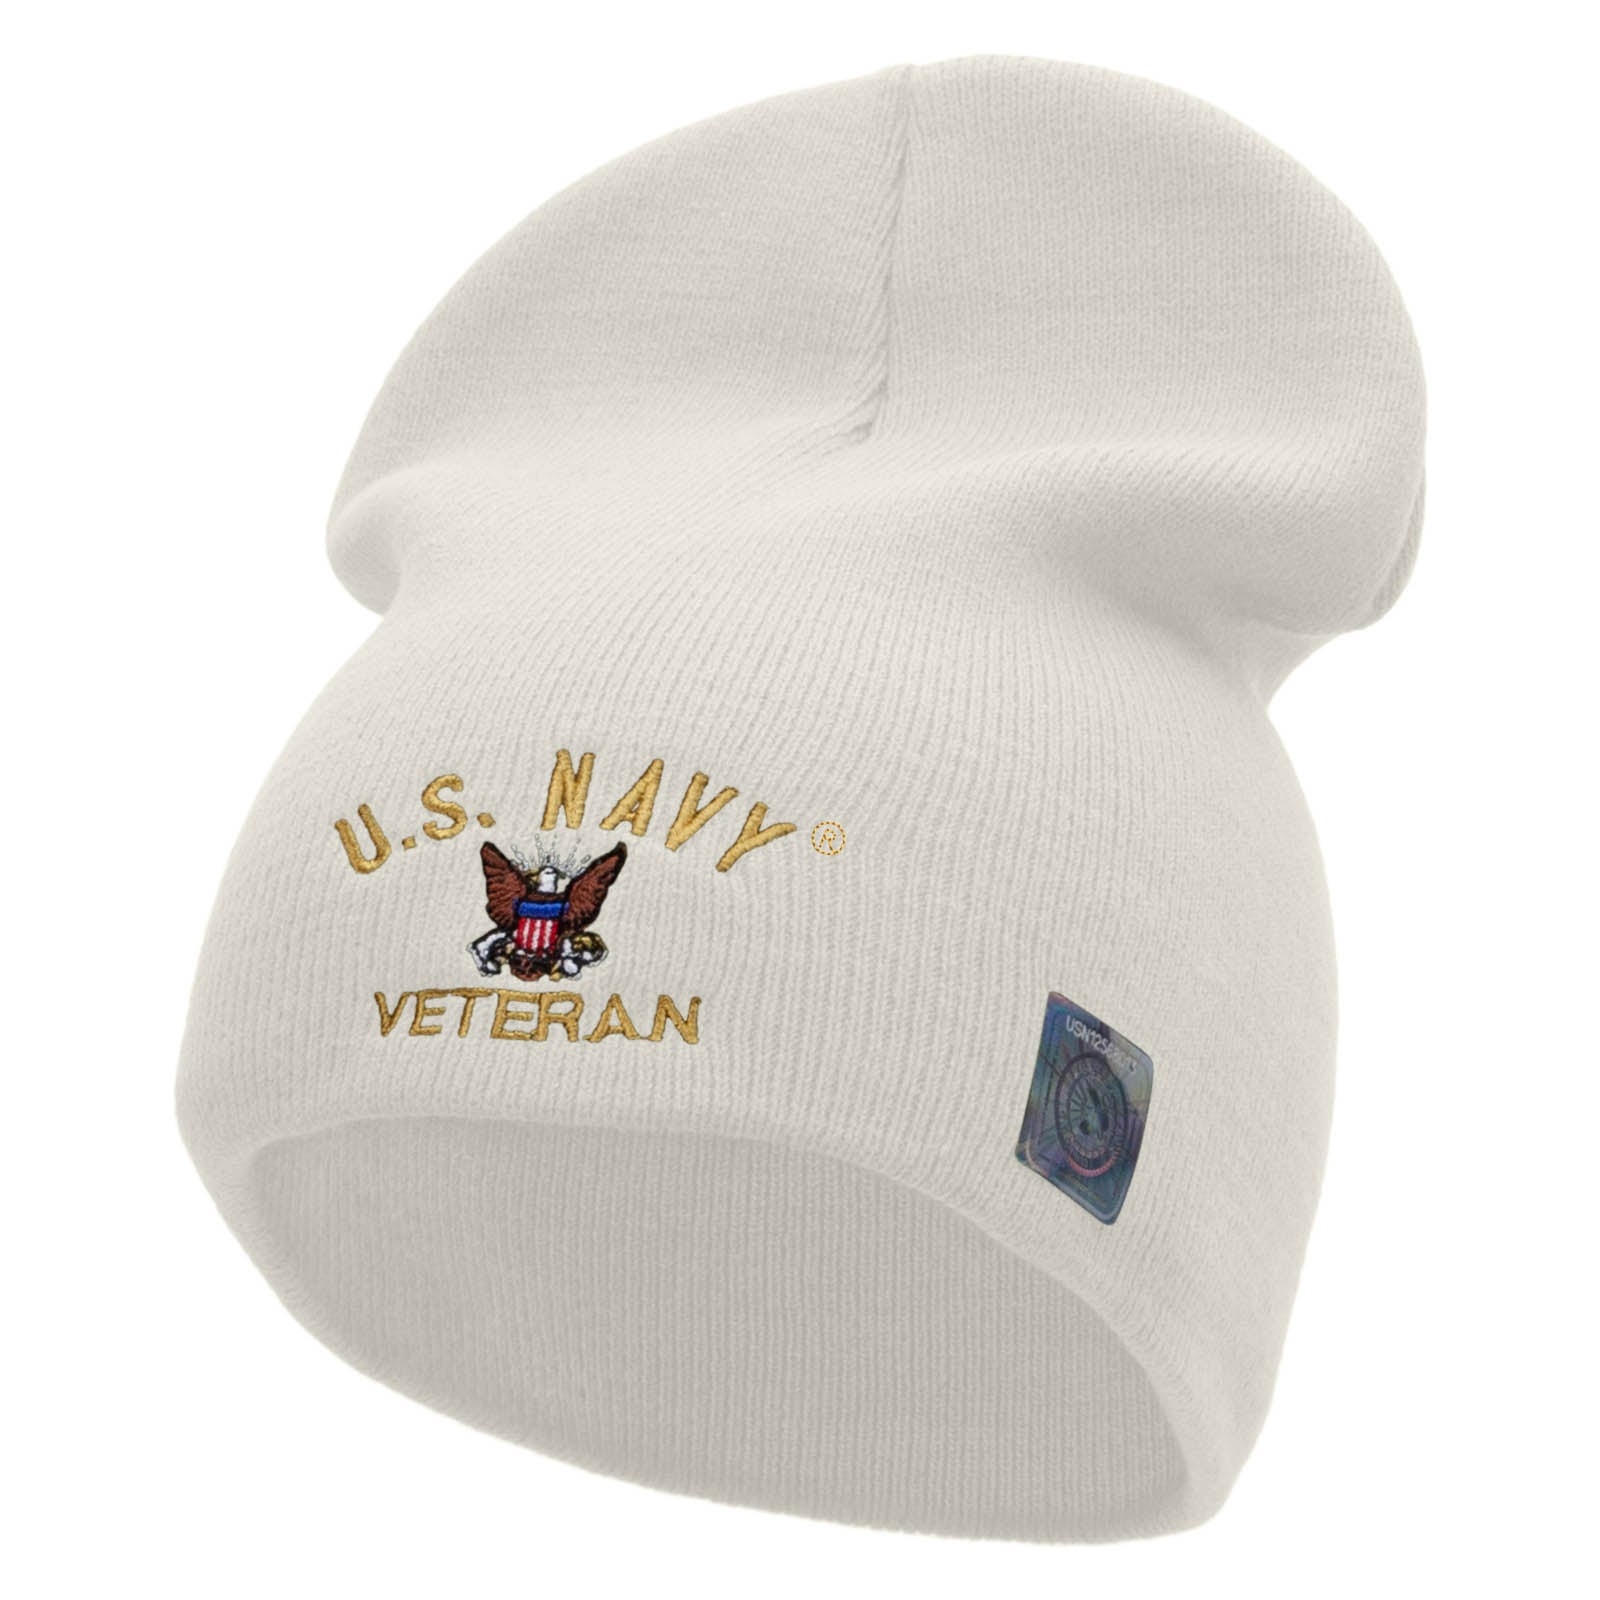 Licensed US Navy Veteran Embroidered Short Beanie Made in USA - White OSFM